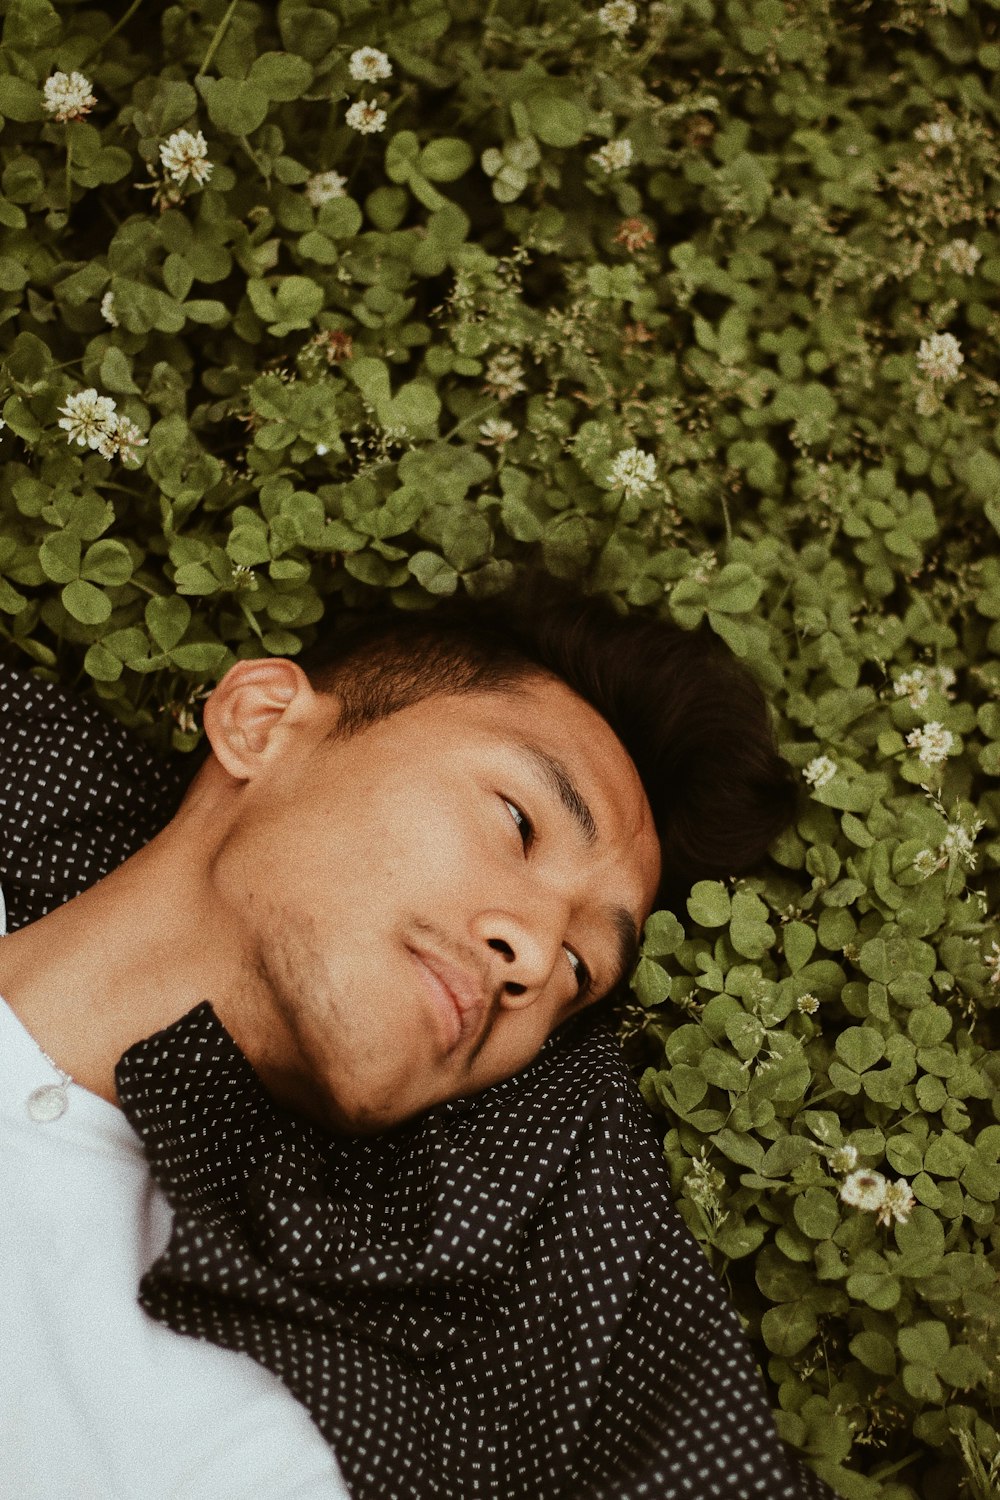 man lying on green leafed plant